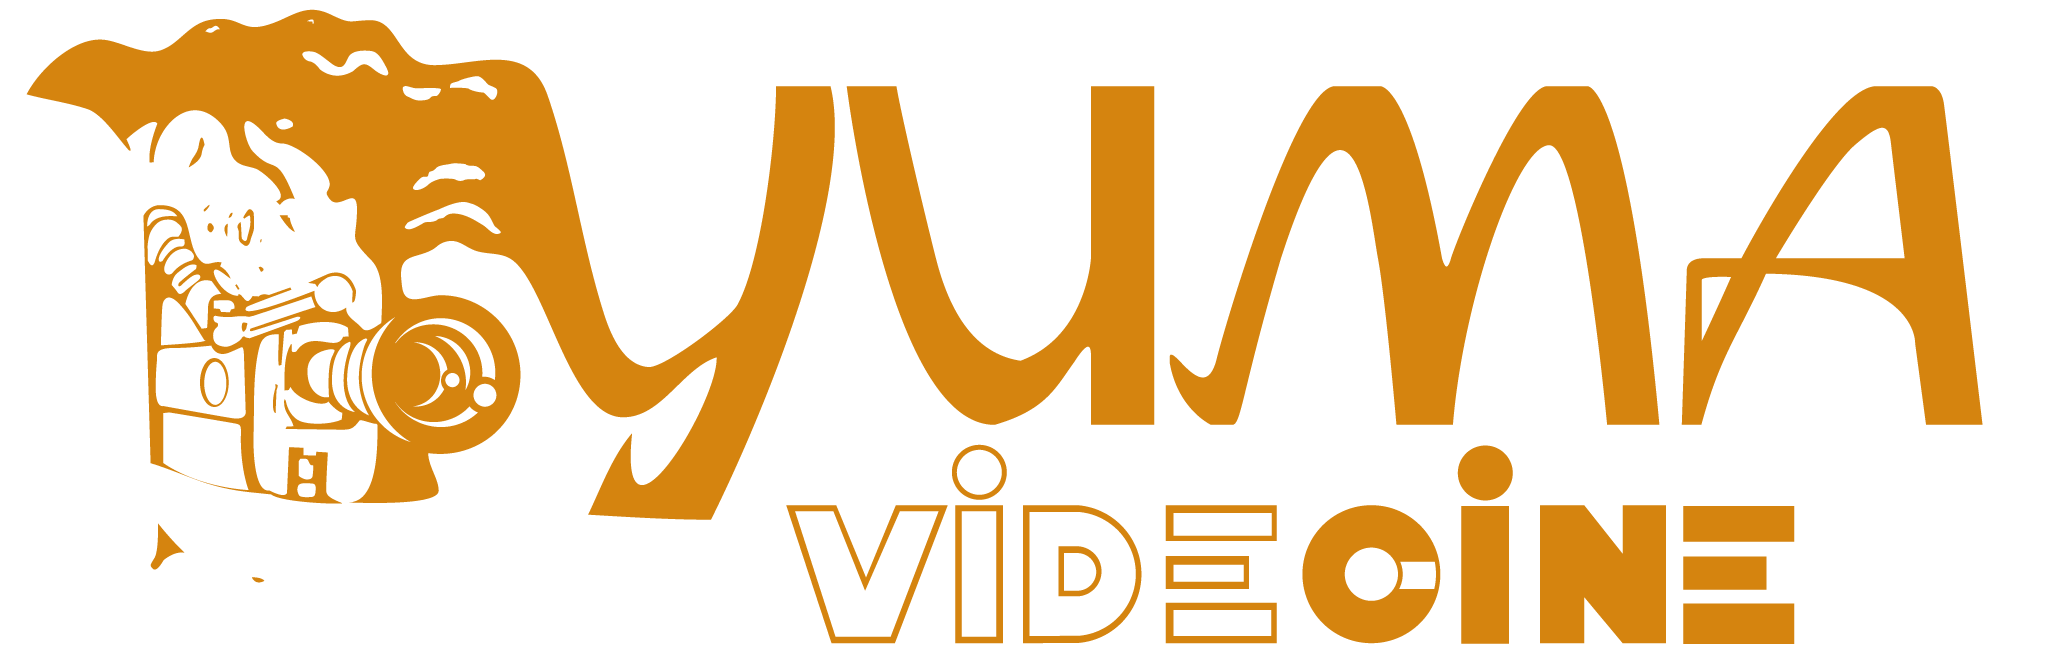 Yuma Video Cine